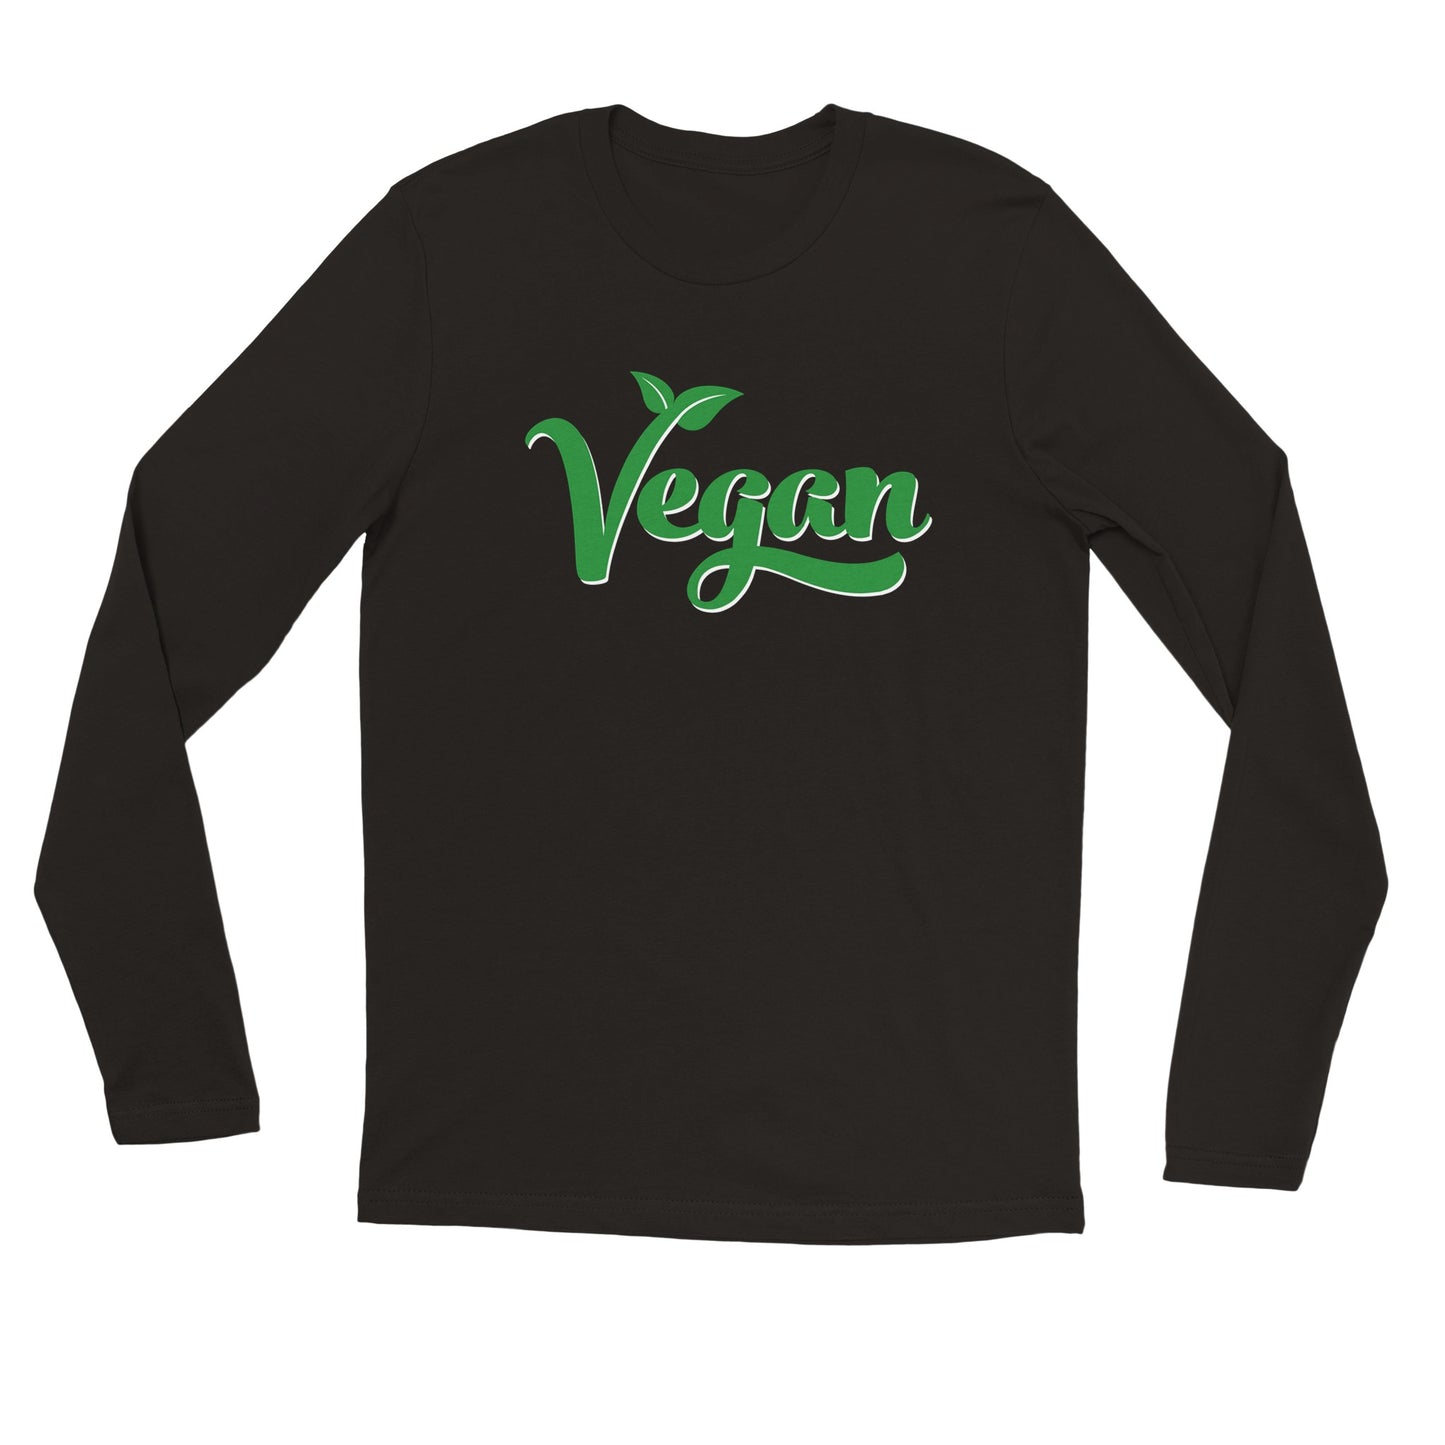 Vegan - Unisex Longsleeve T-shirt